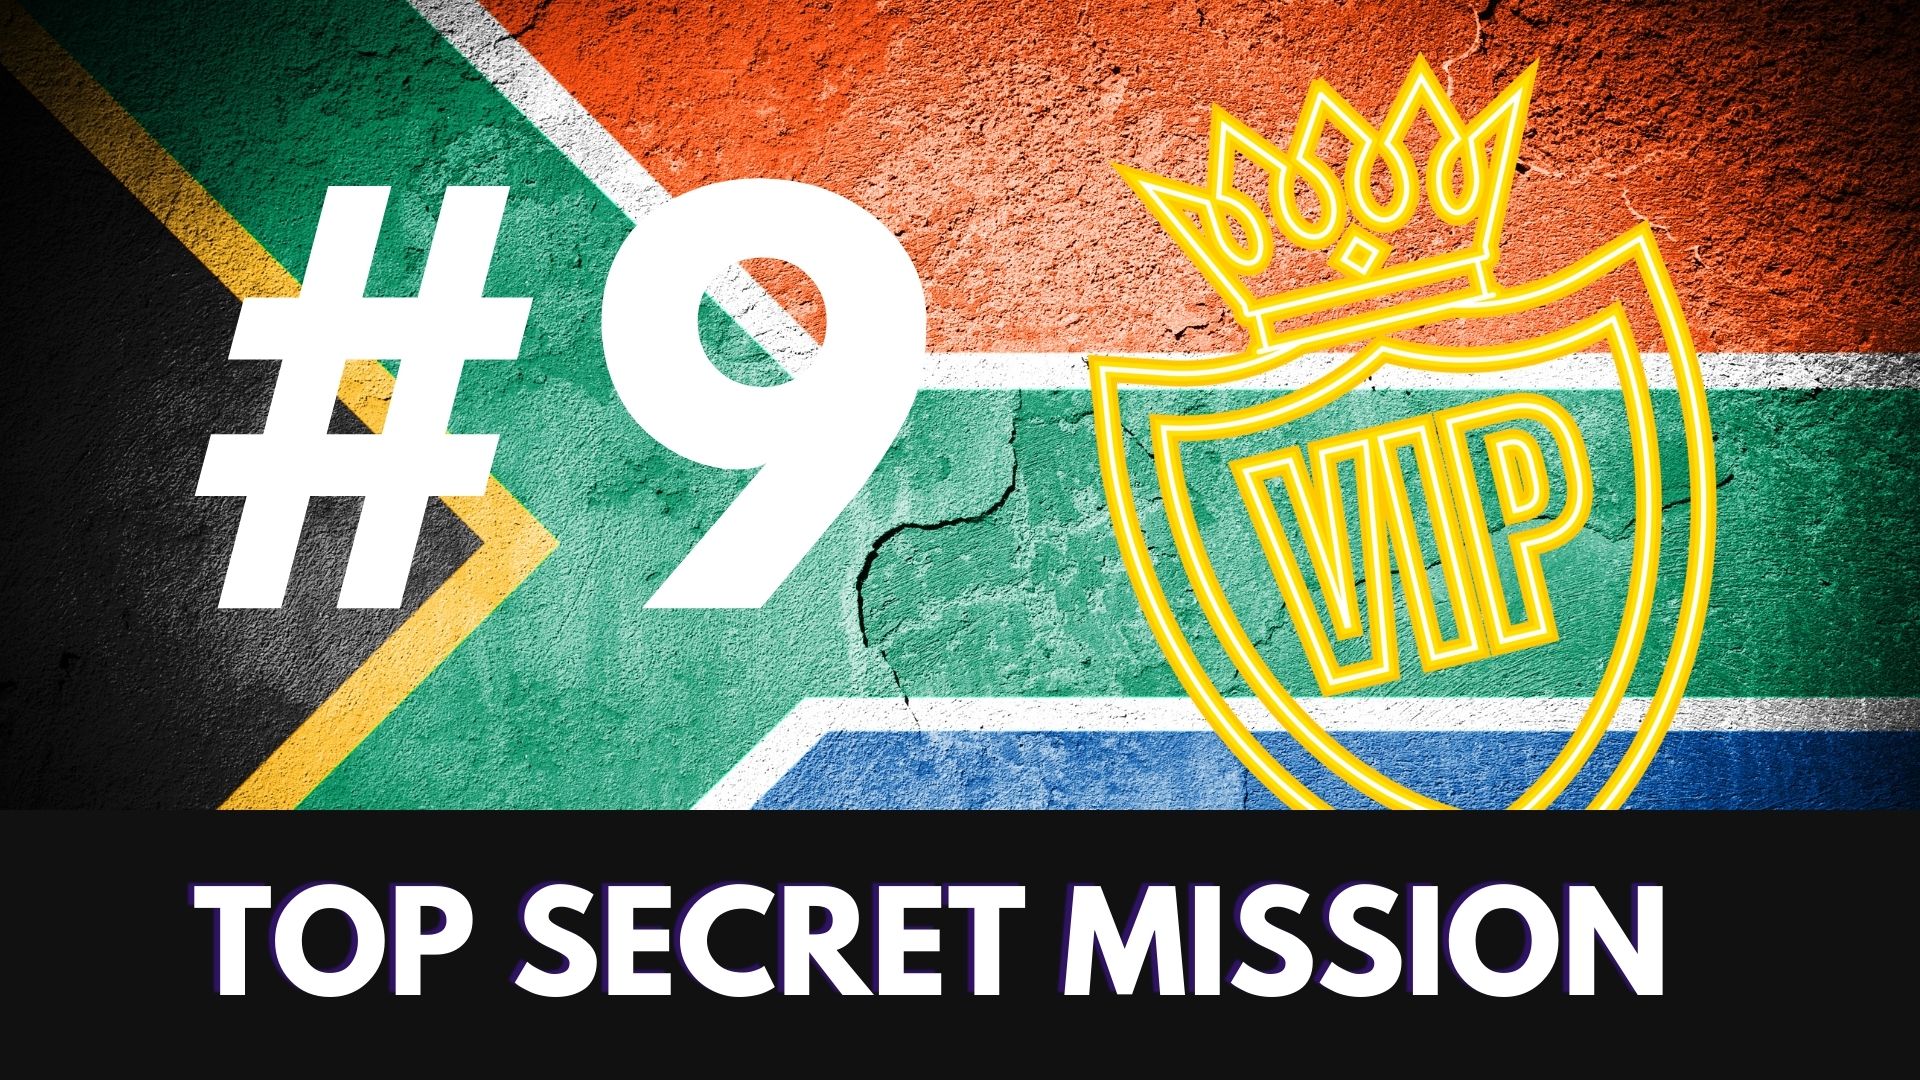 Top Secret Mission 9 Spirit